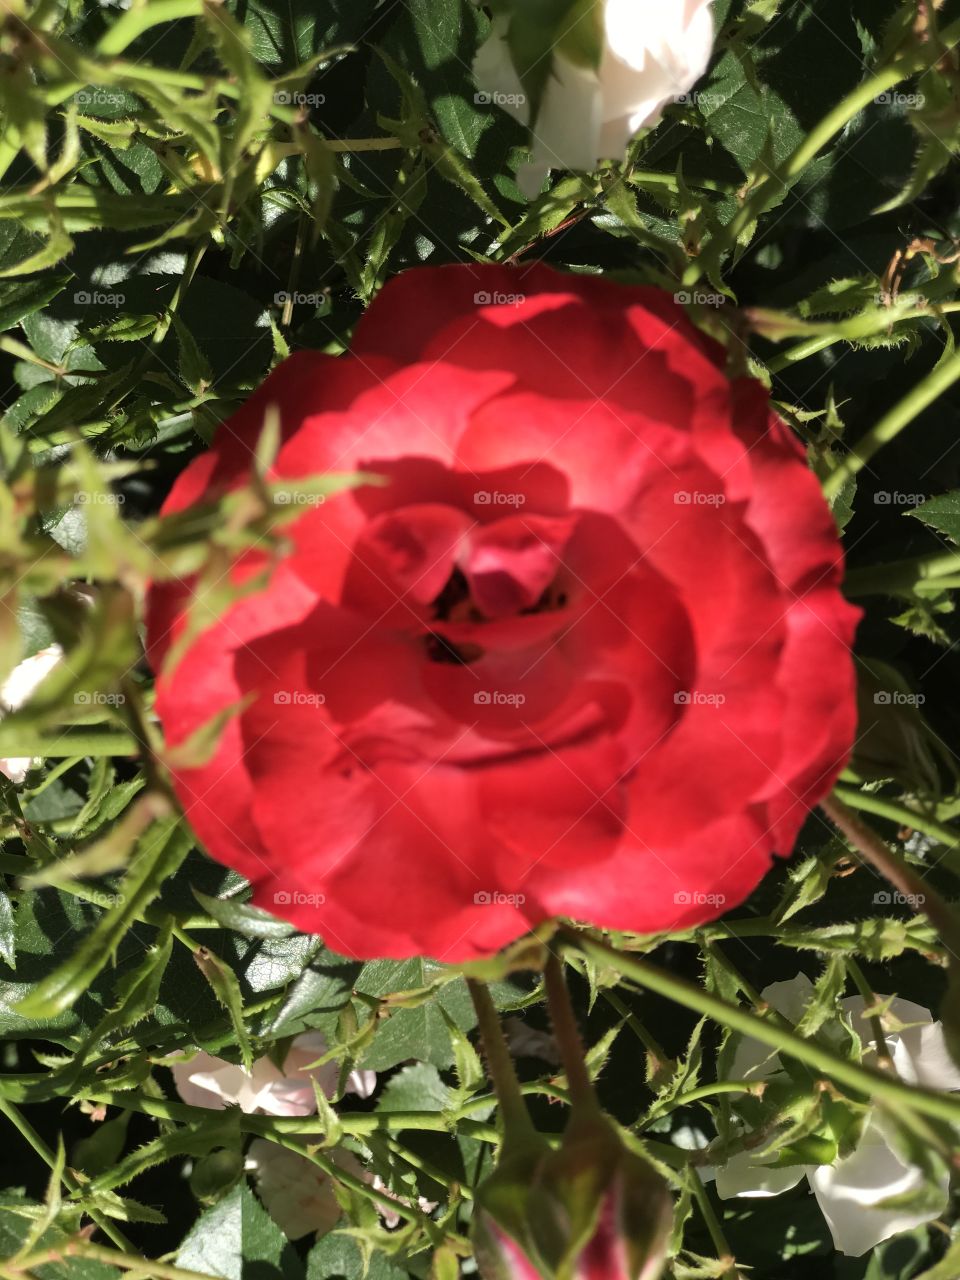 Portland Rose garden: Rose petal maze